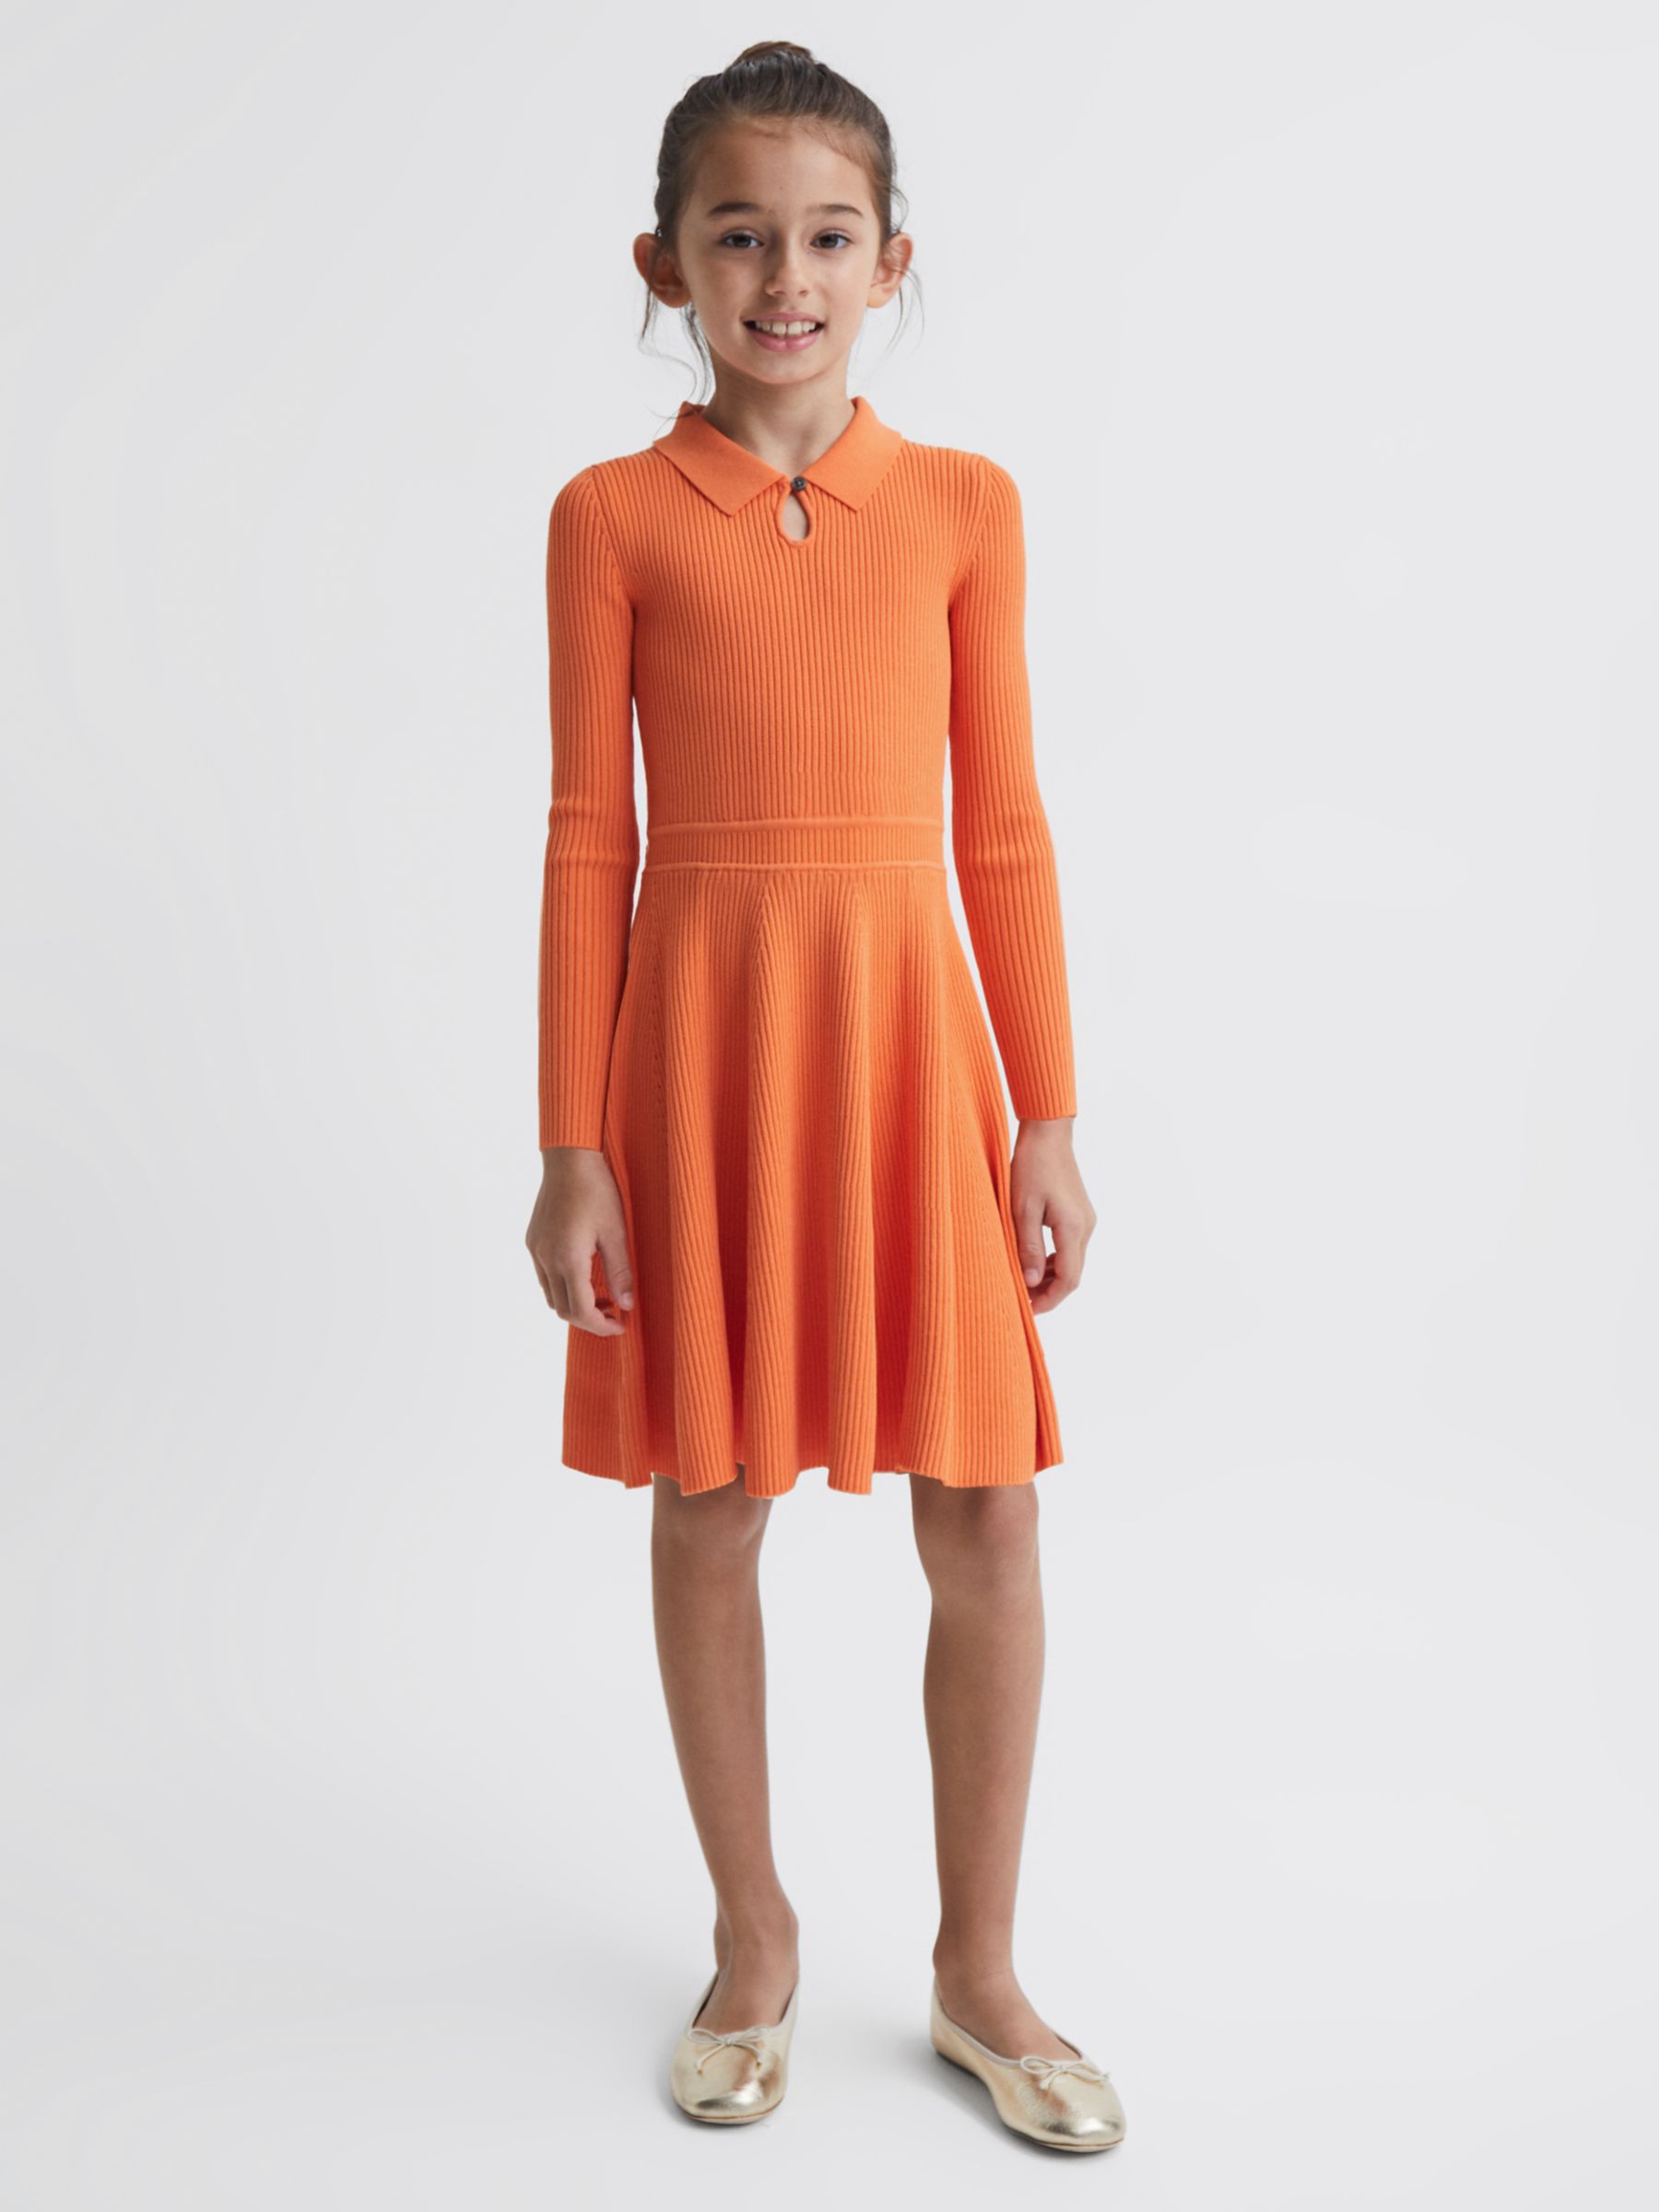 Reiss Kids' Clare Rib Knit Detail Dress, Orange, 4-5 years